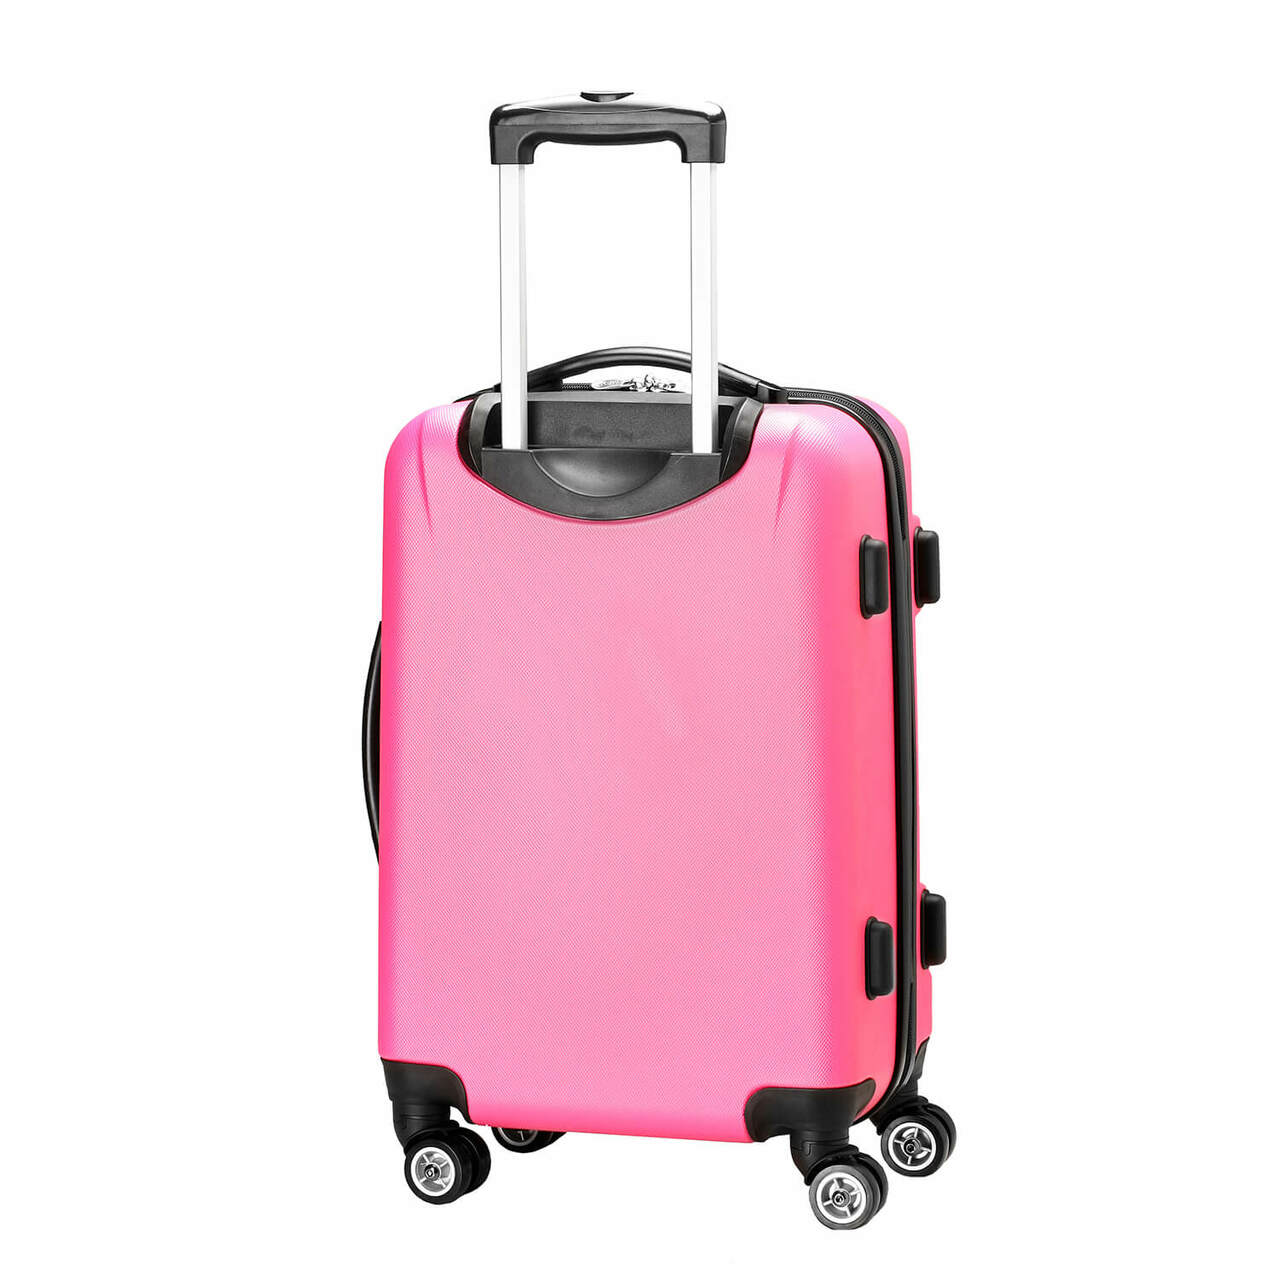 Nebraska Cornhuskers 20" Pink Domestic Carry-on Spinner